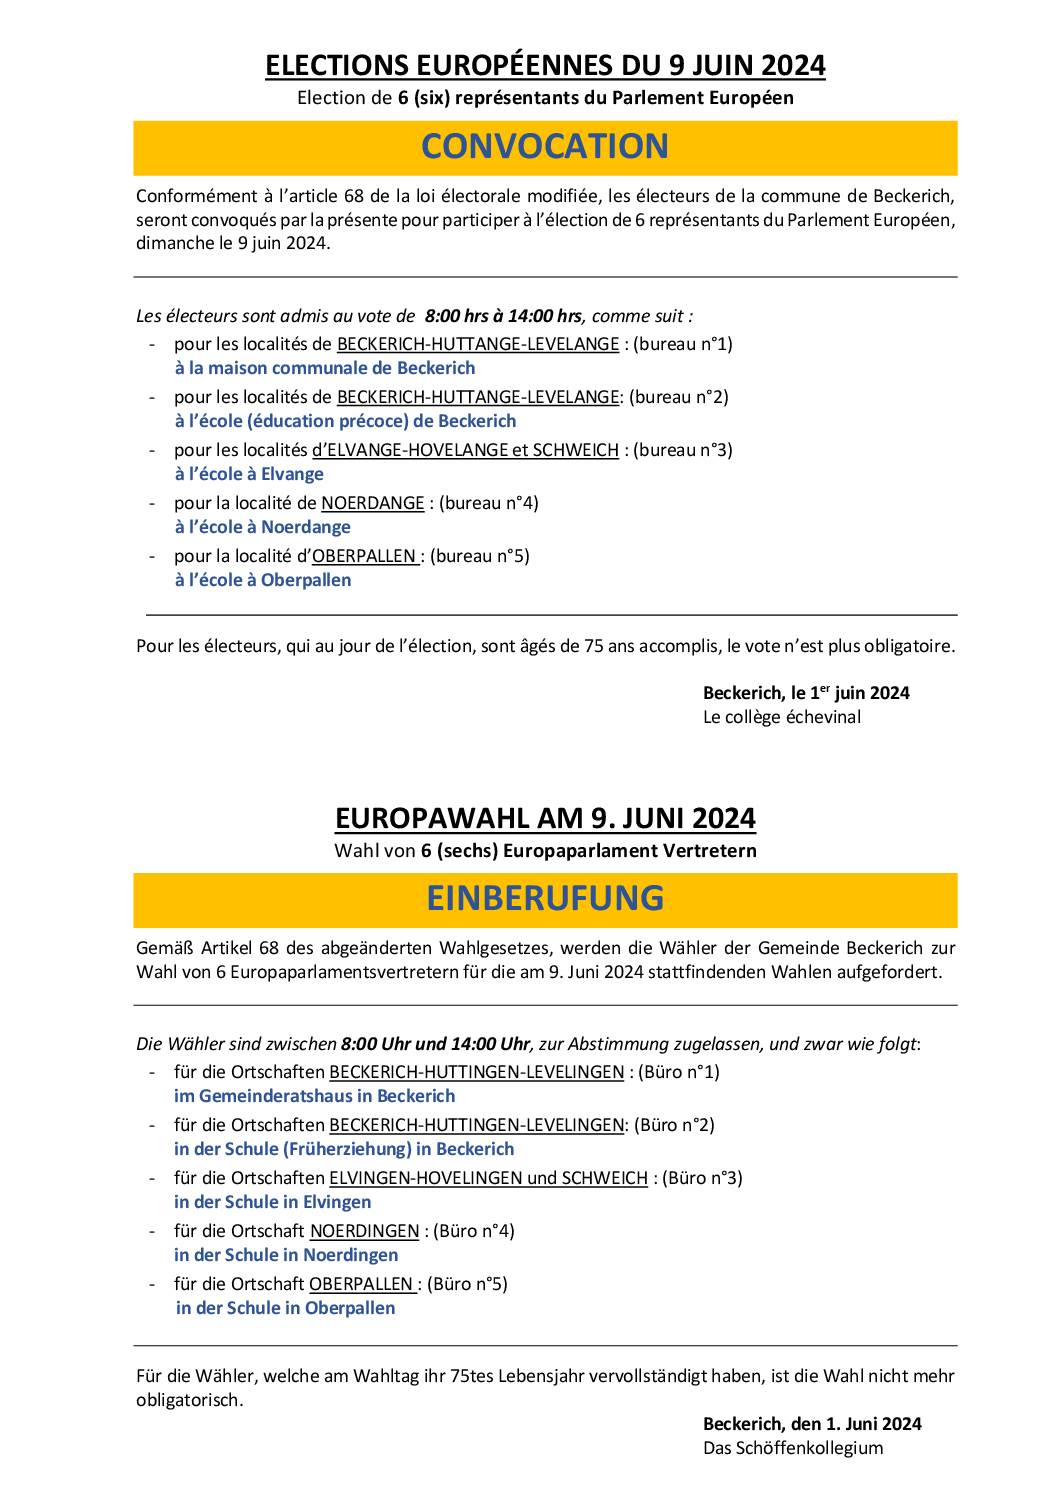 Elections-europeennes-convocation-participation-aux-elections-01-06-2024